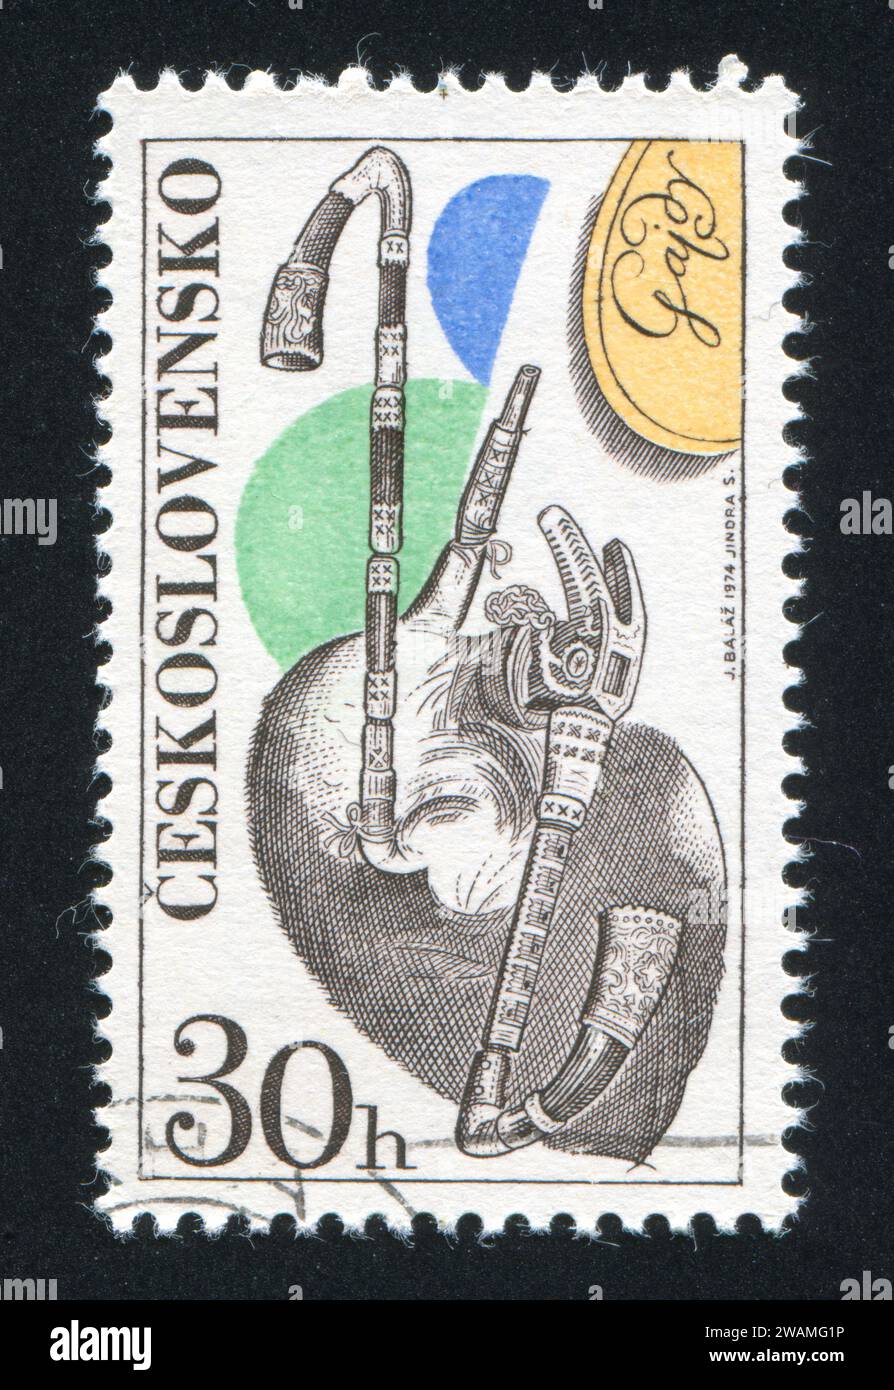 TCHÉCOSLOVAQUIE - CIRCA 1974 : timbre imprimé par la Tchécoslovaquie, montre cornemuse, circa 1974 Banque D'Images